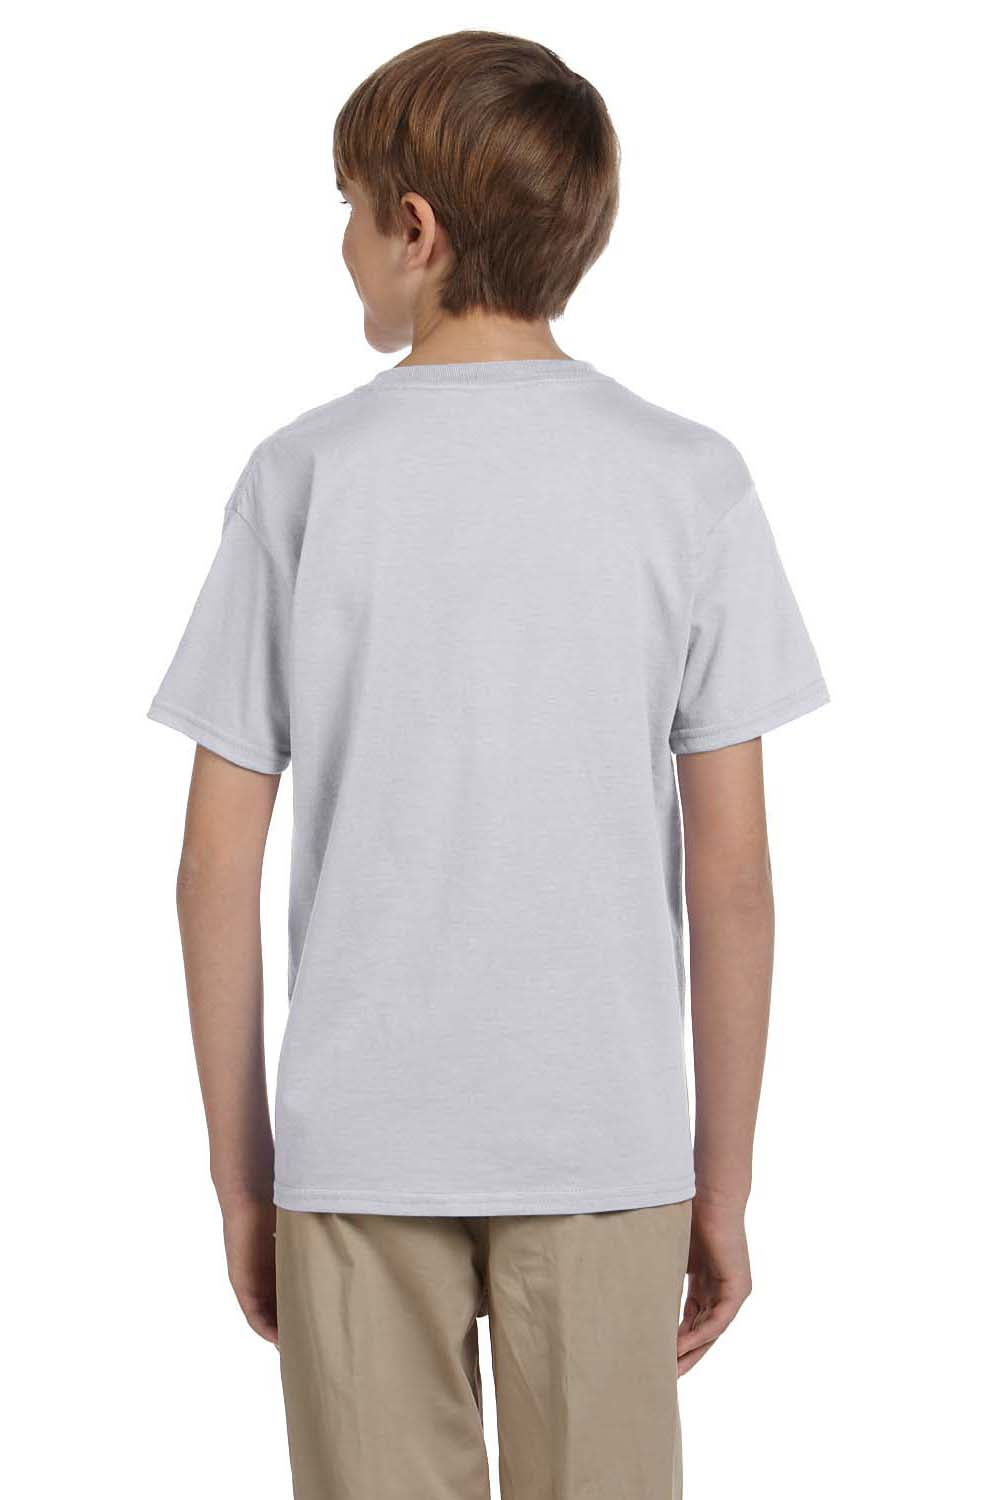 Hanes 5370 Youth EcoSmart Short Sleeve Crewneck T-Shirt Ash Grey Back